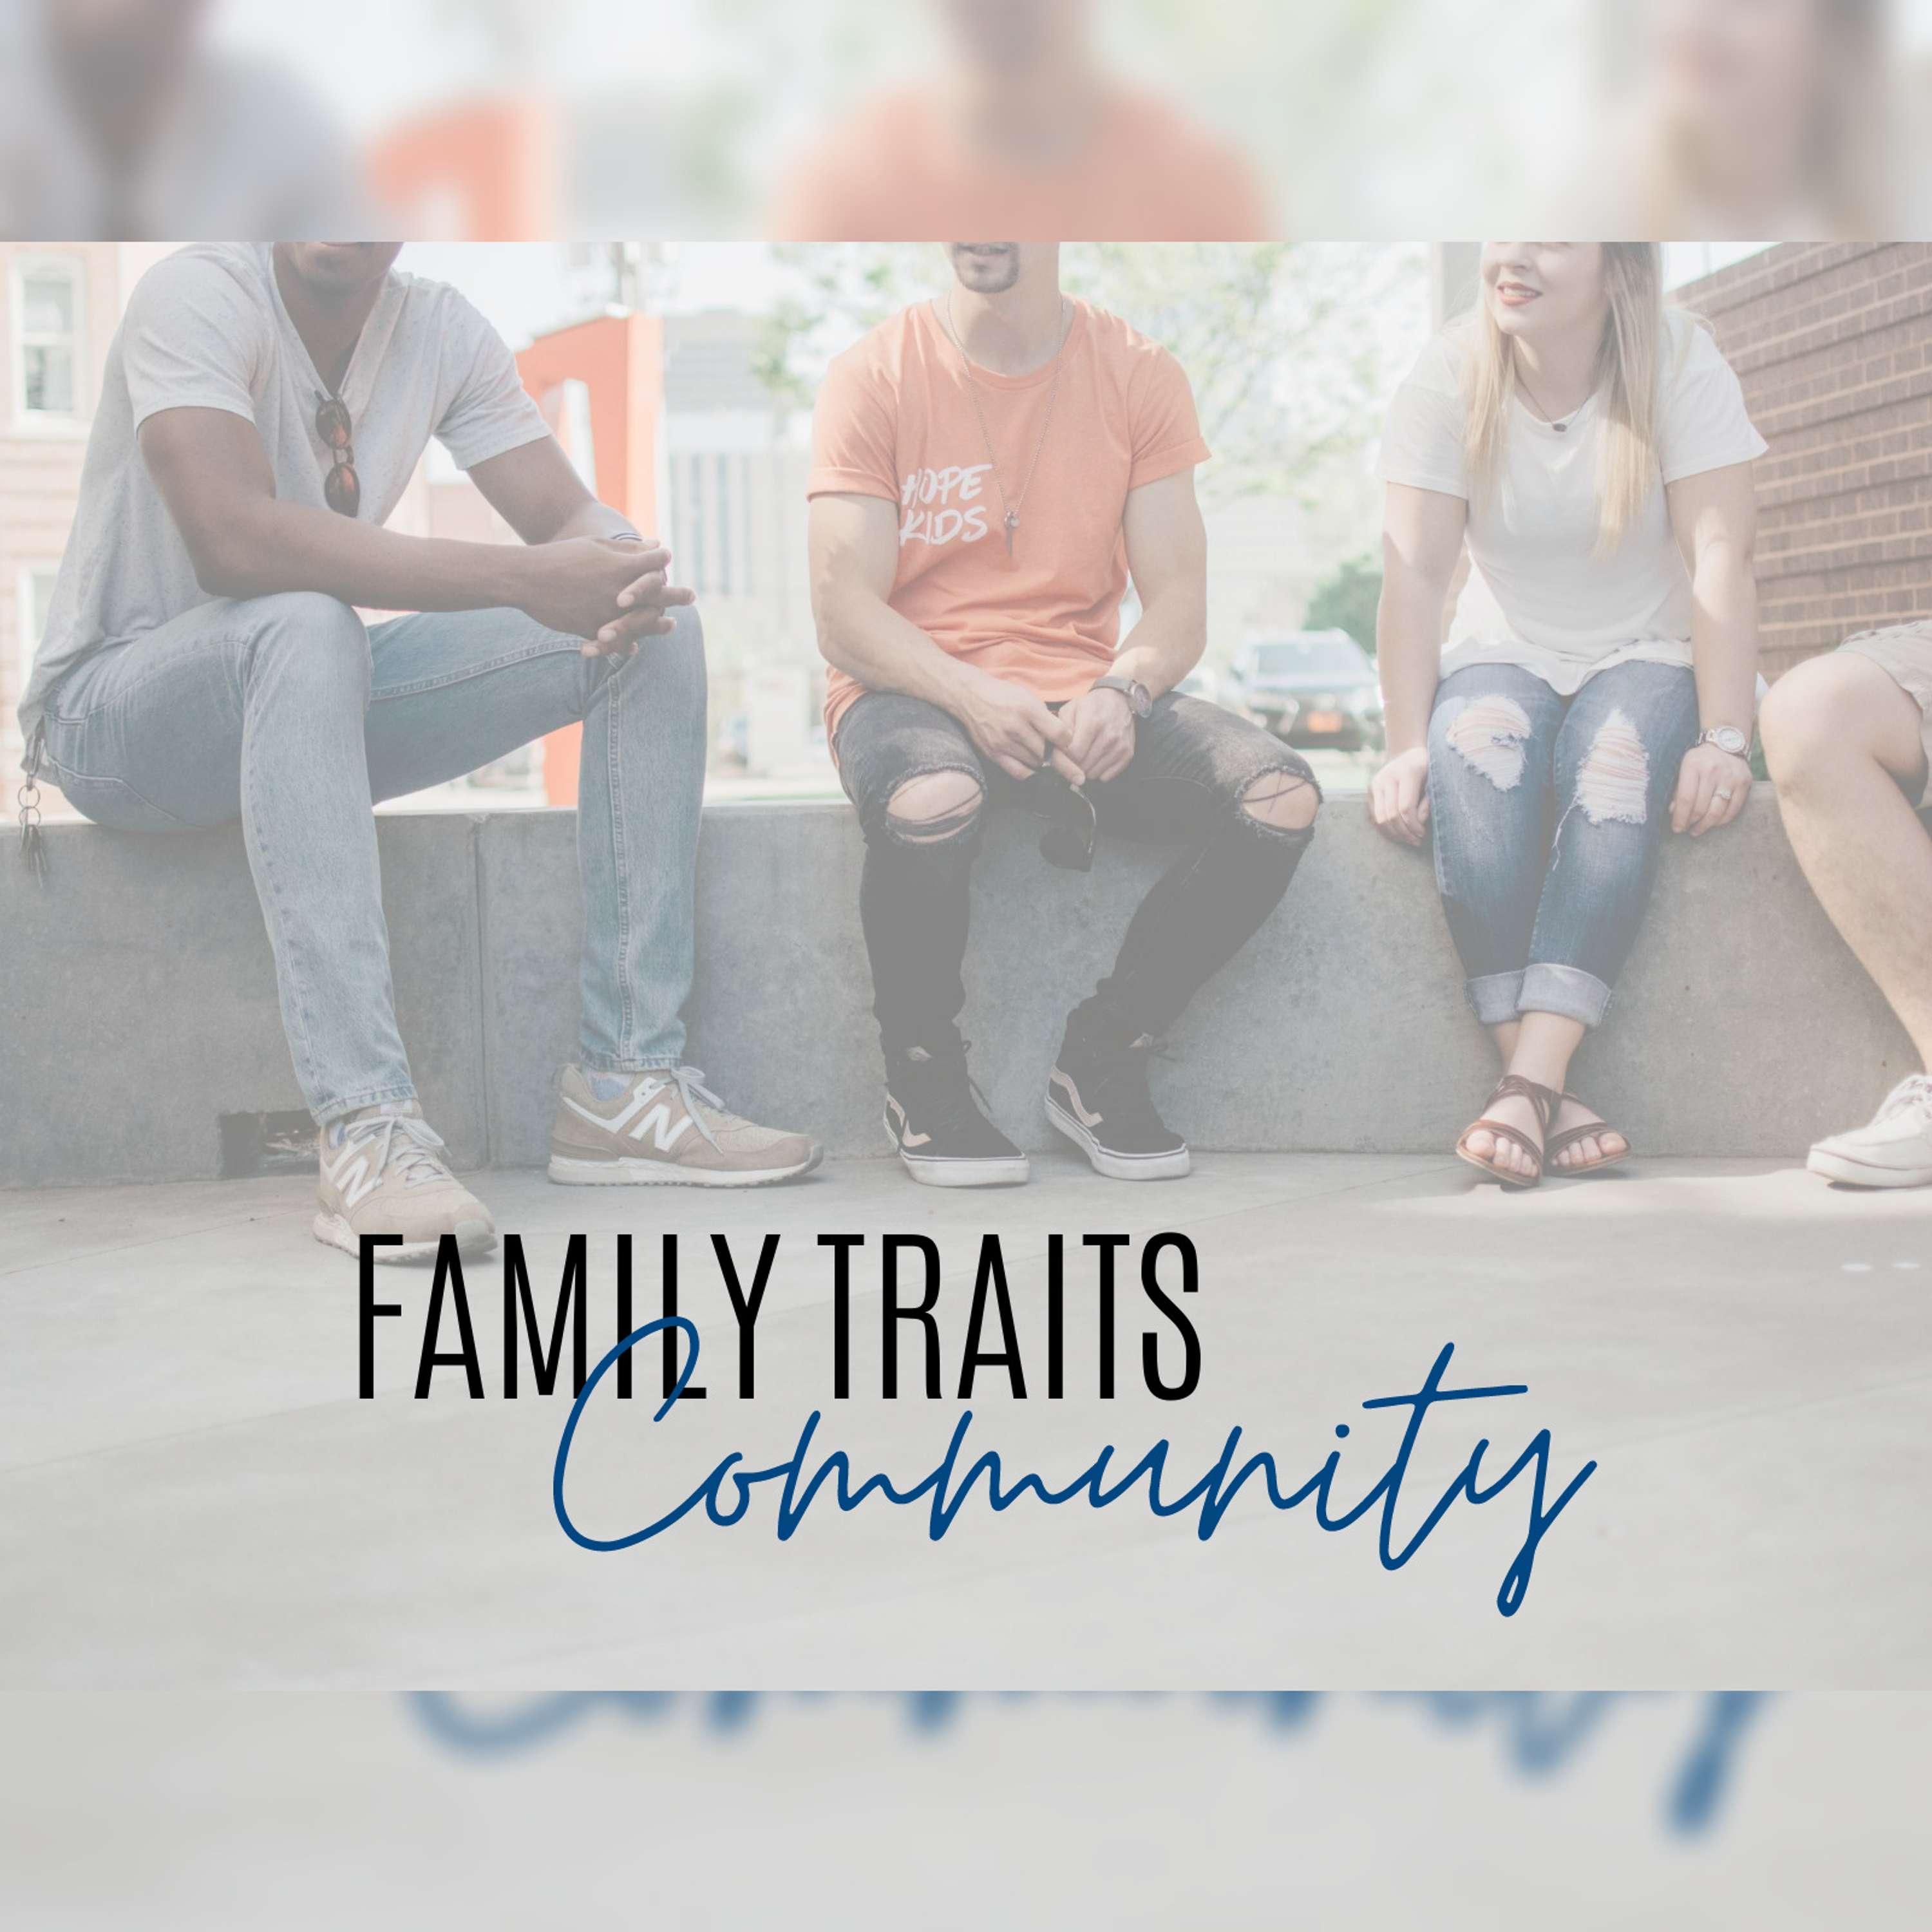 Family Traits Week 5 | Community